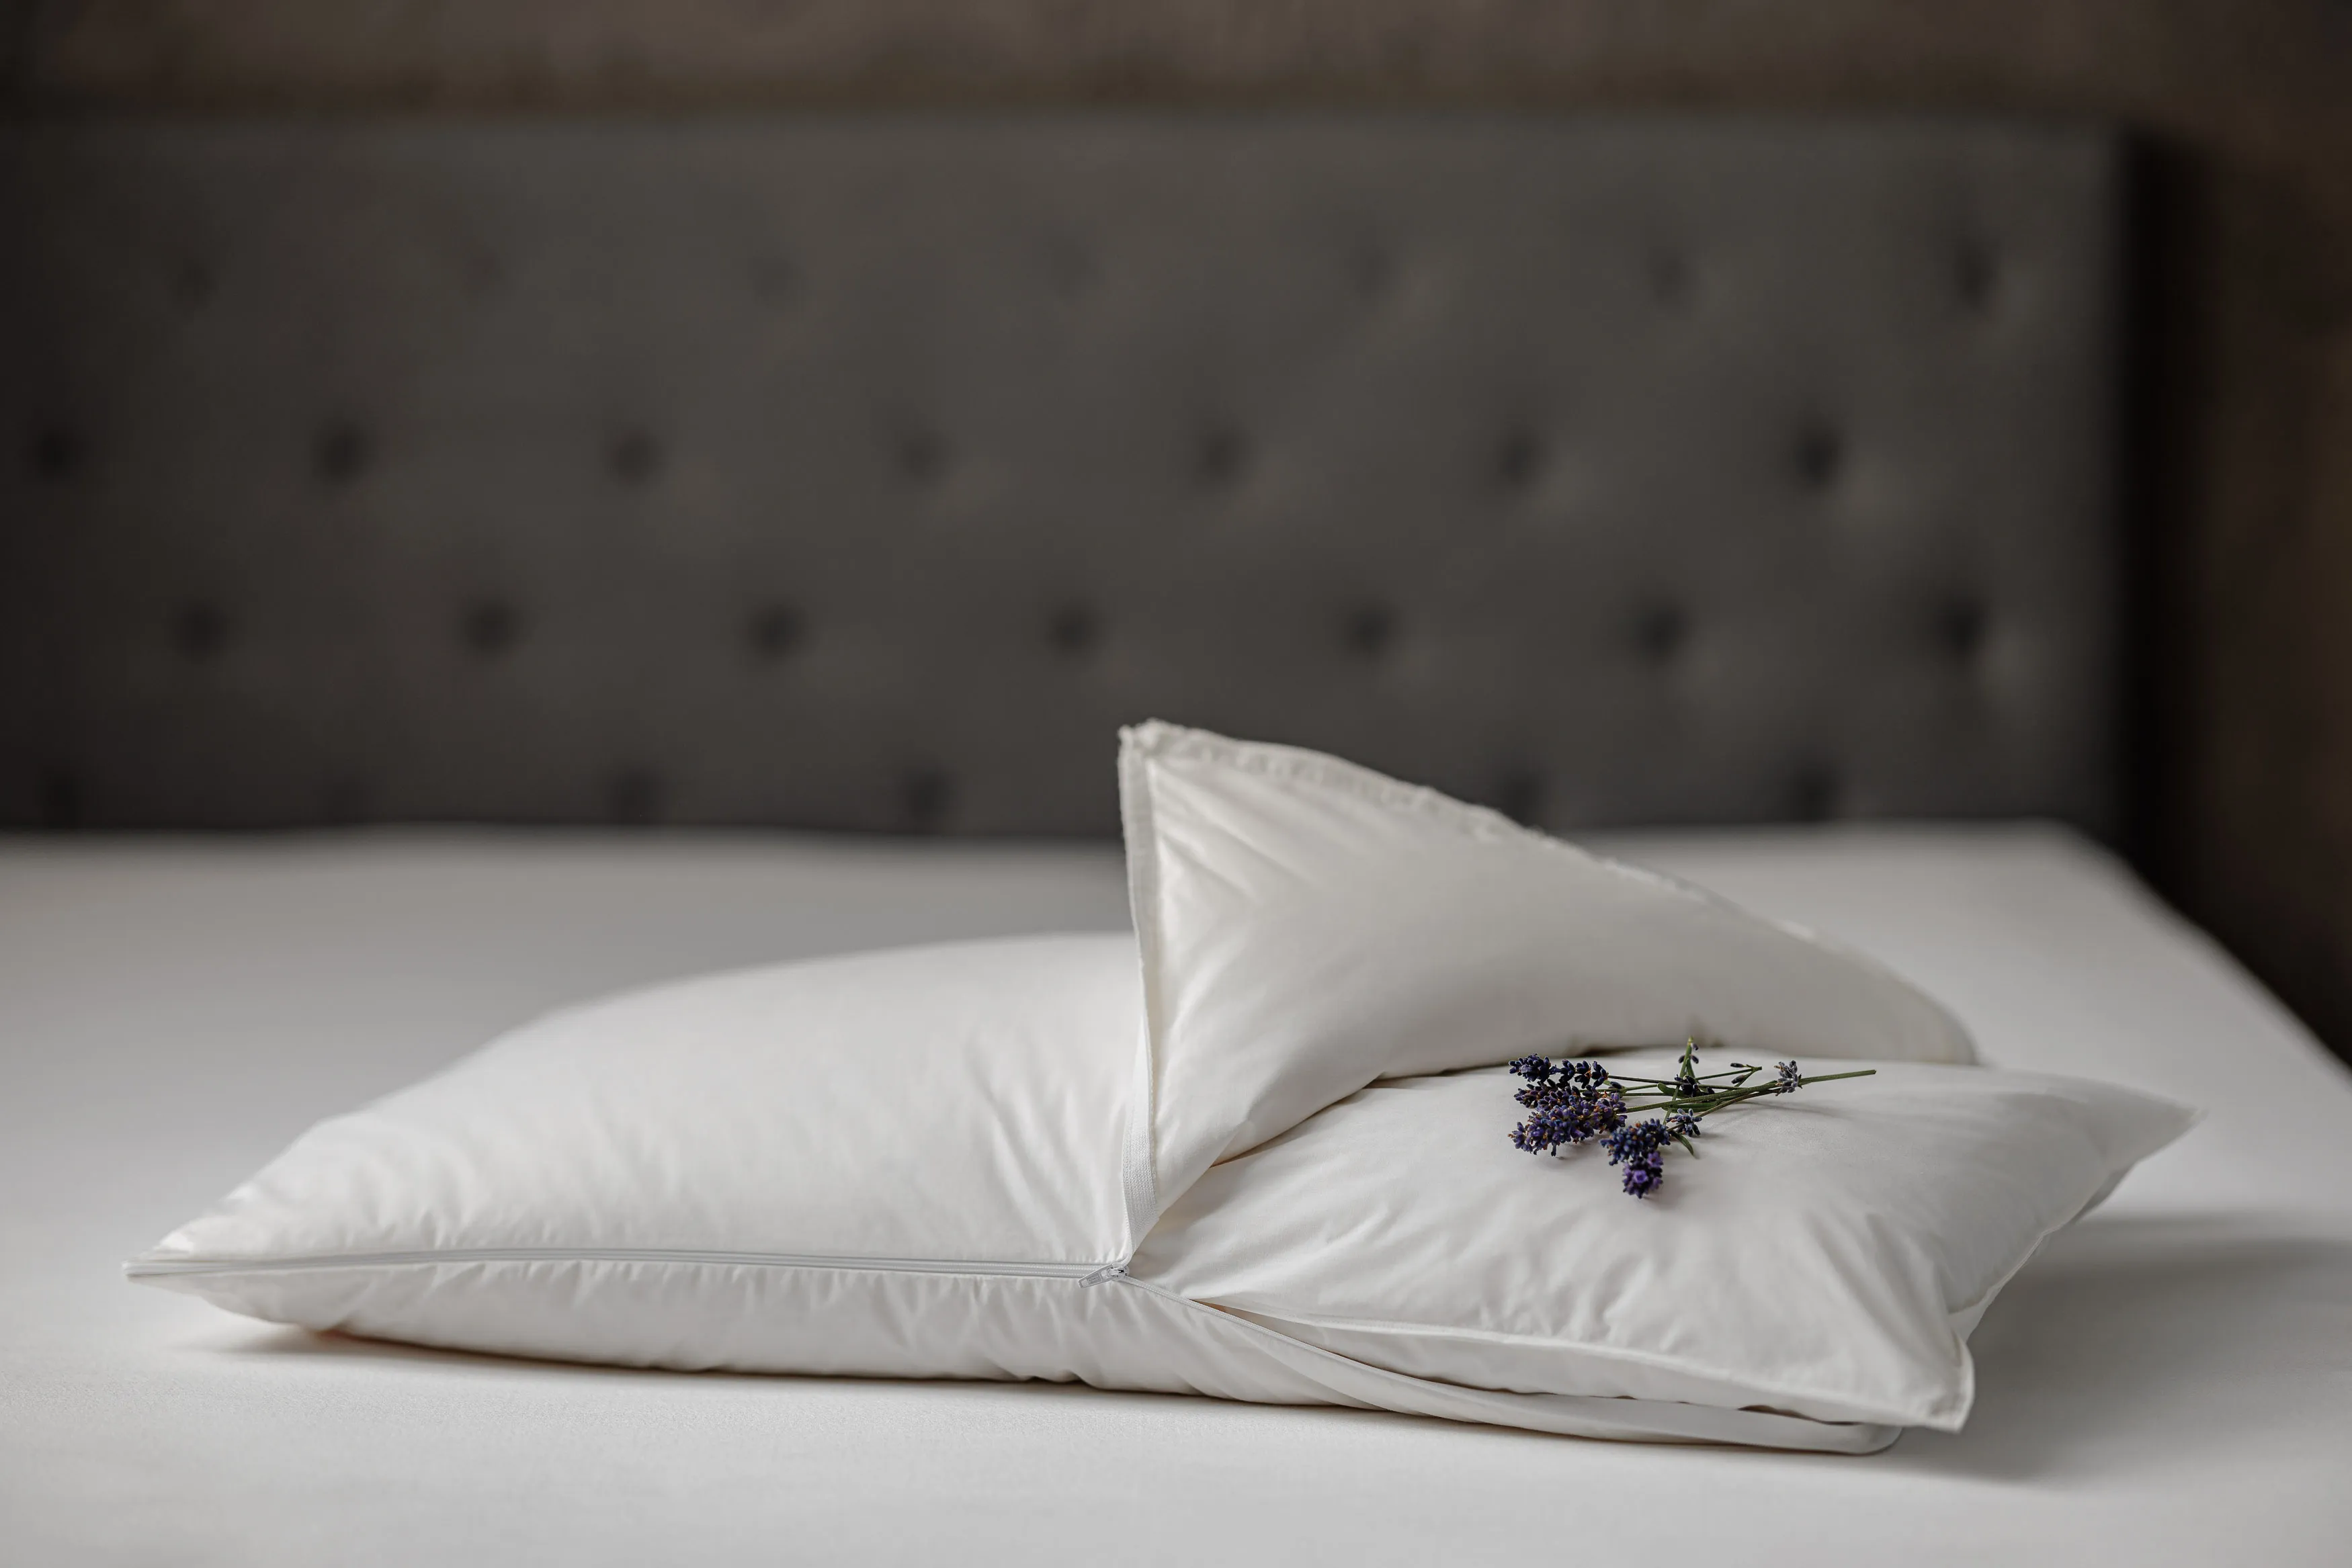 Pillow with inner core Perla Lavanda